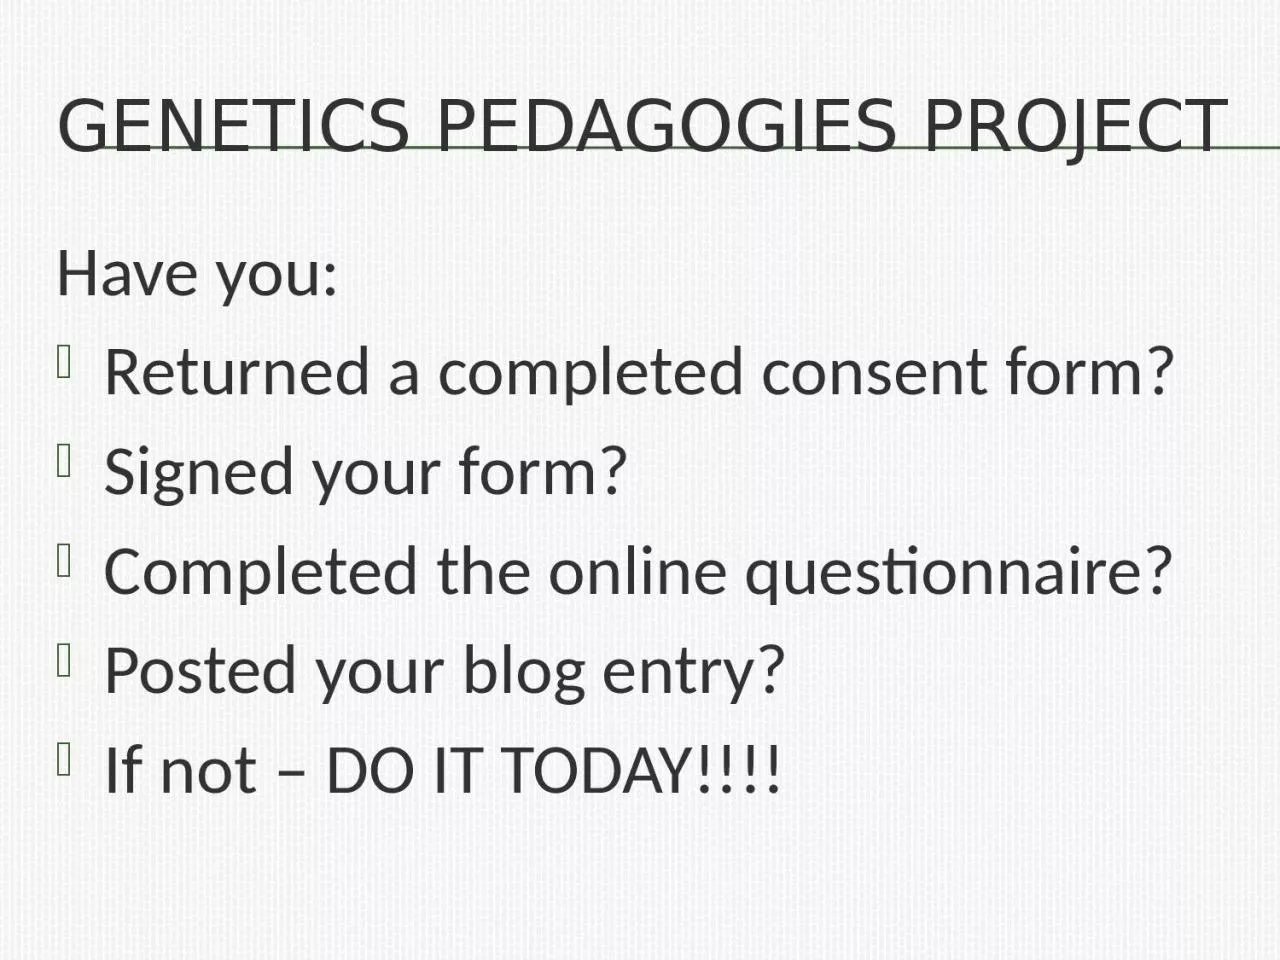 Genetics pedagogies project